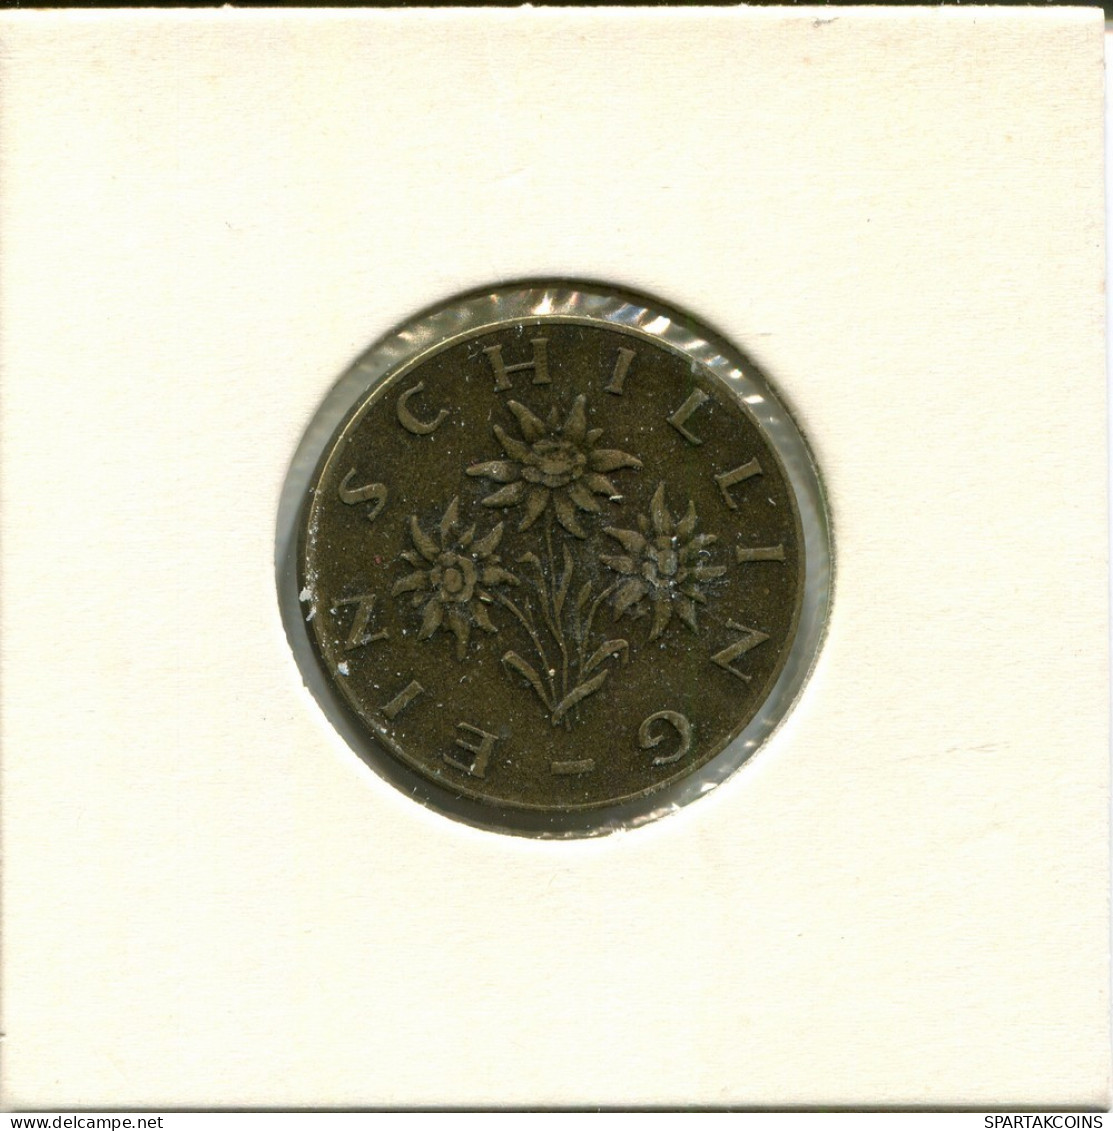 1 SCHILLING 1959 AUSTRIA Coin #AV067.U.A - Autriche